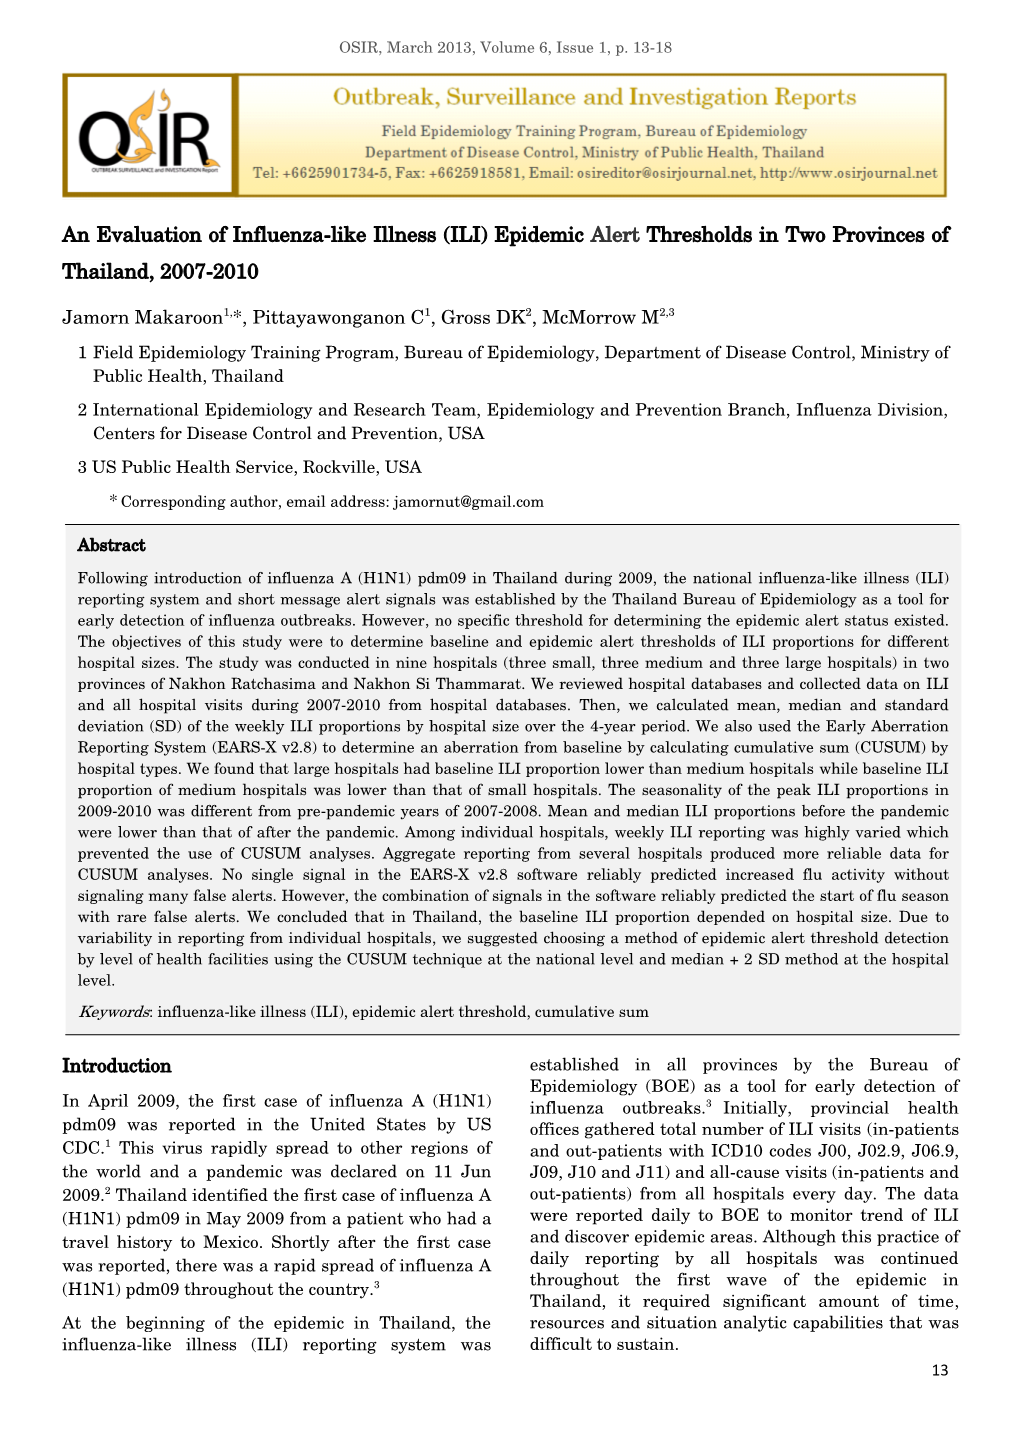 An Evaluation of Influenza-Like Illness (ILI) Epidemic Alert Thresholds in Two Provinces of Thailand, 2007-2010